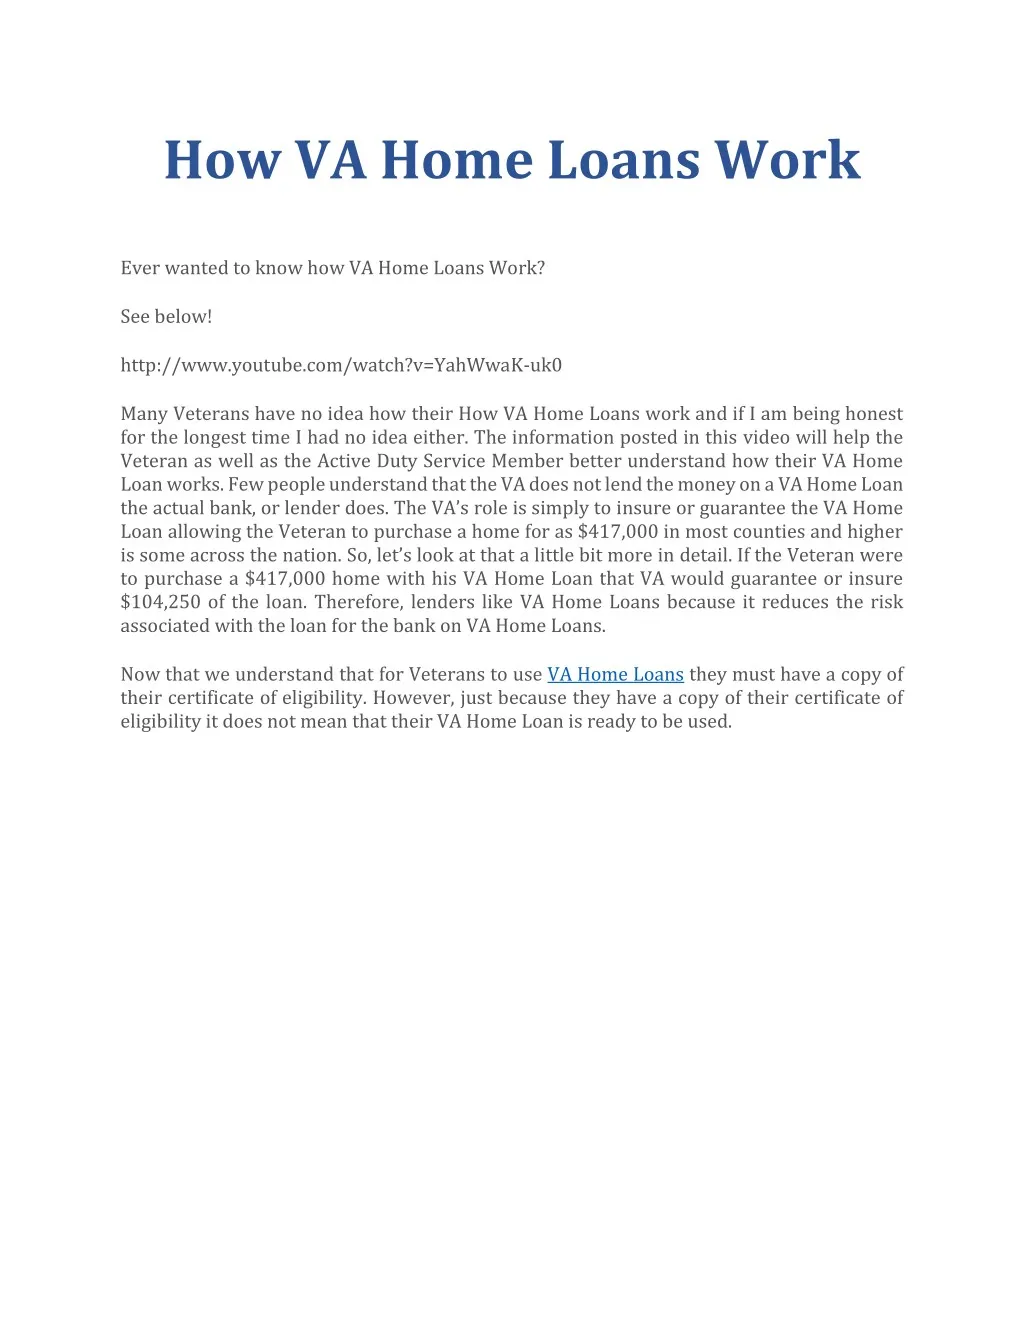 how va home loans work